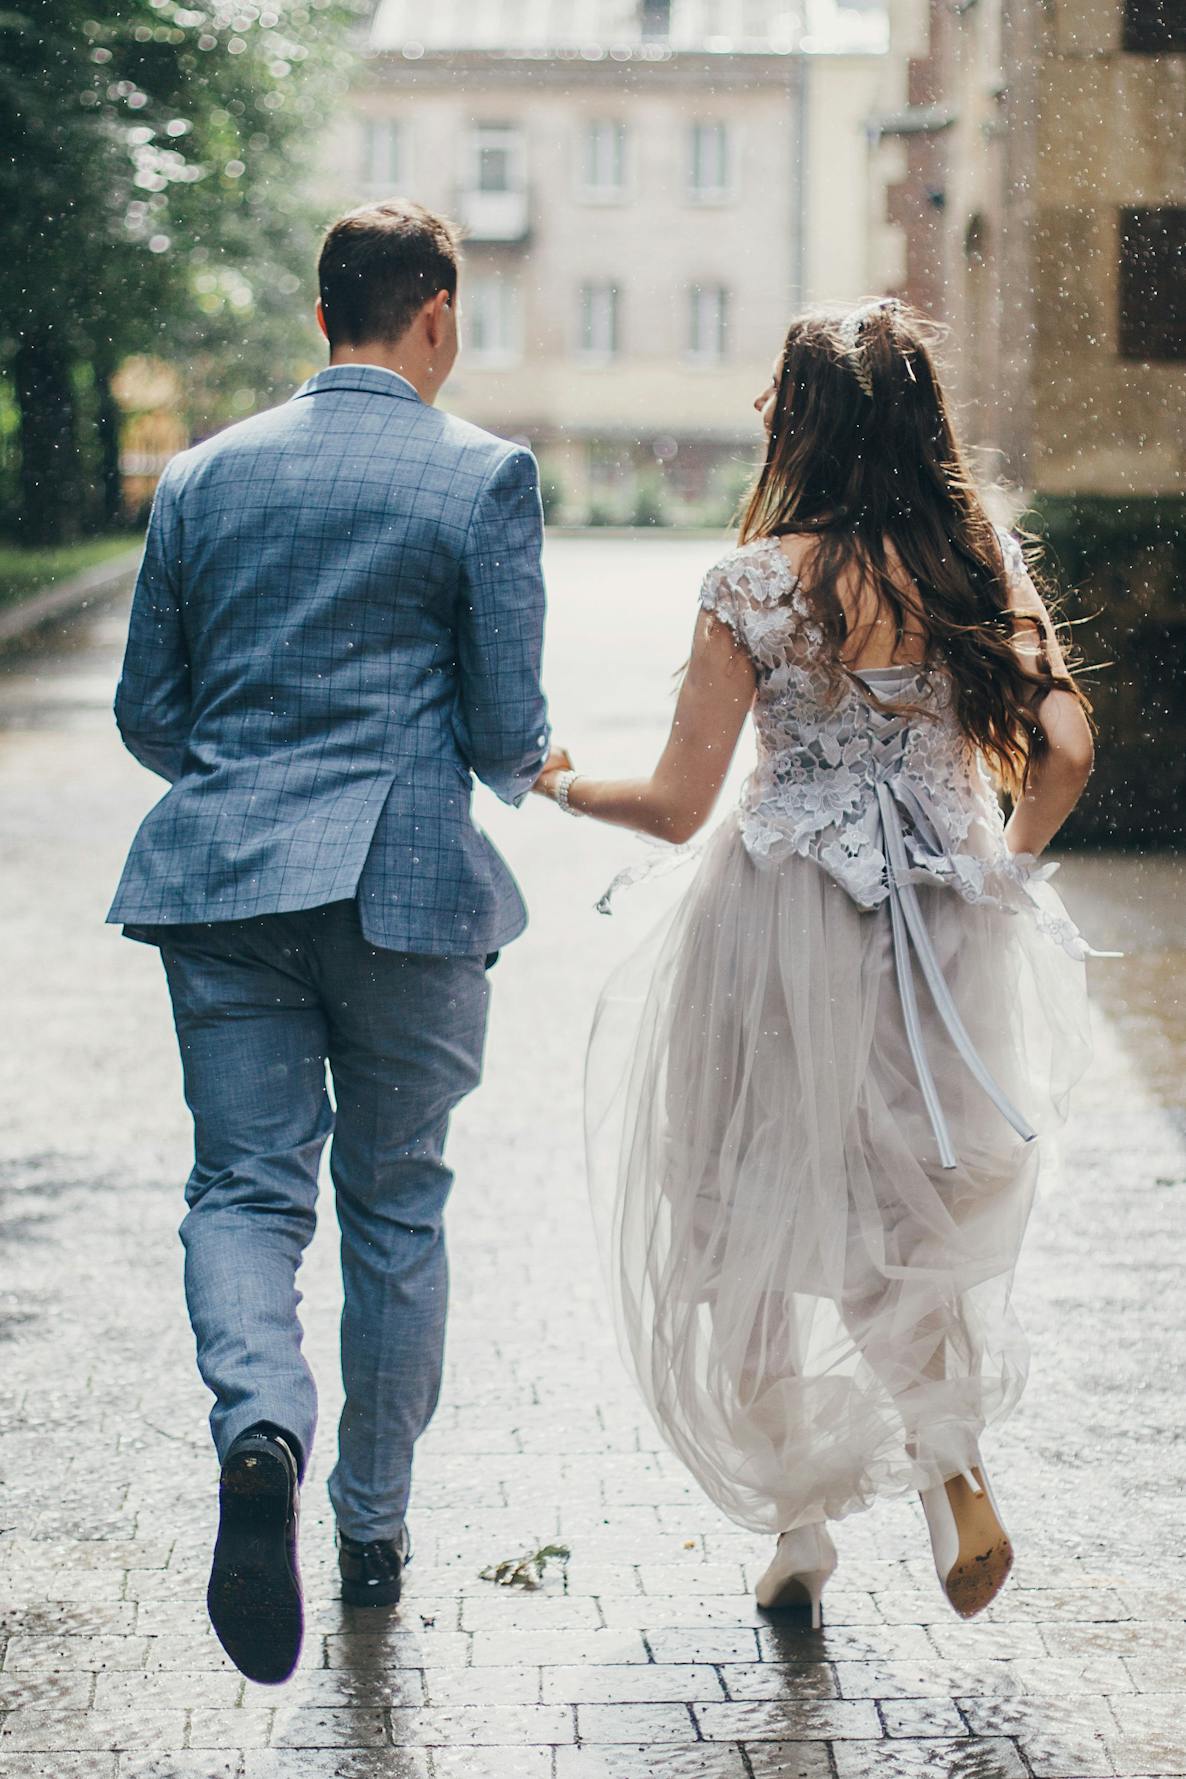 Couple runs through the rain after their wedding